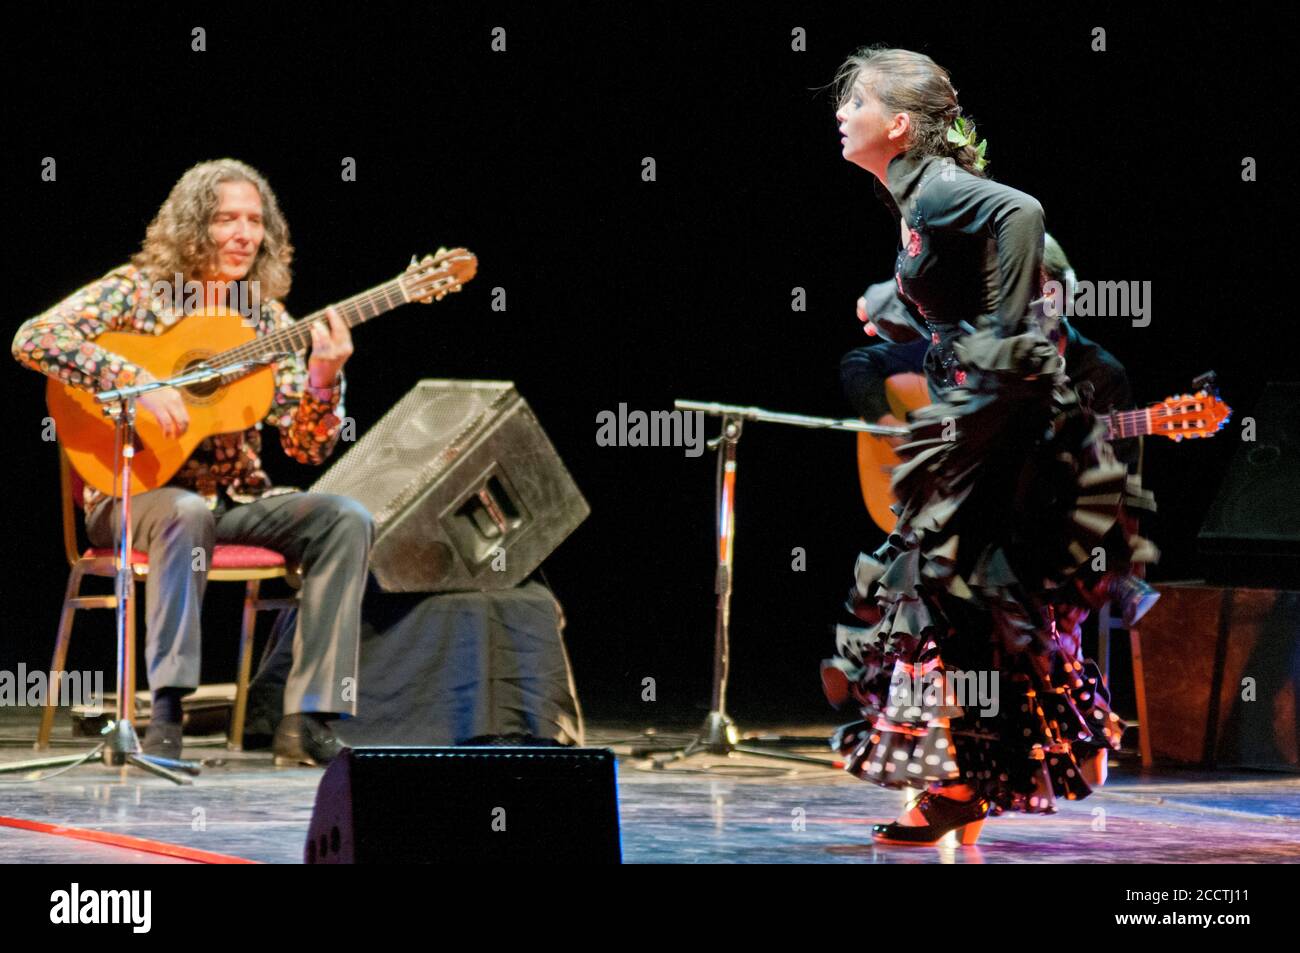 Tomatito, Spanish flamenco guitarist, with female dancer on stage Stock Photo